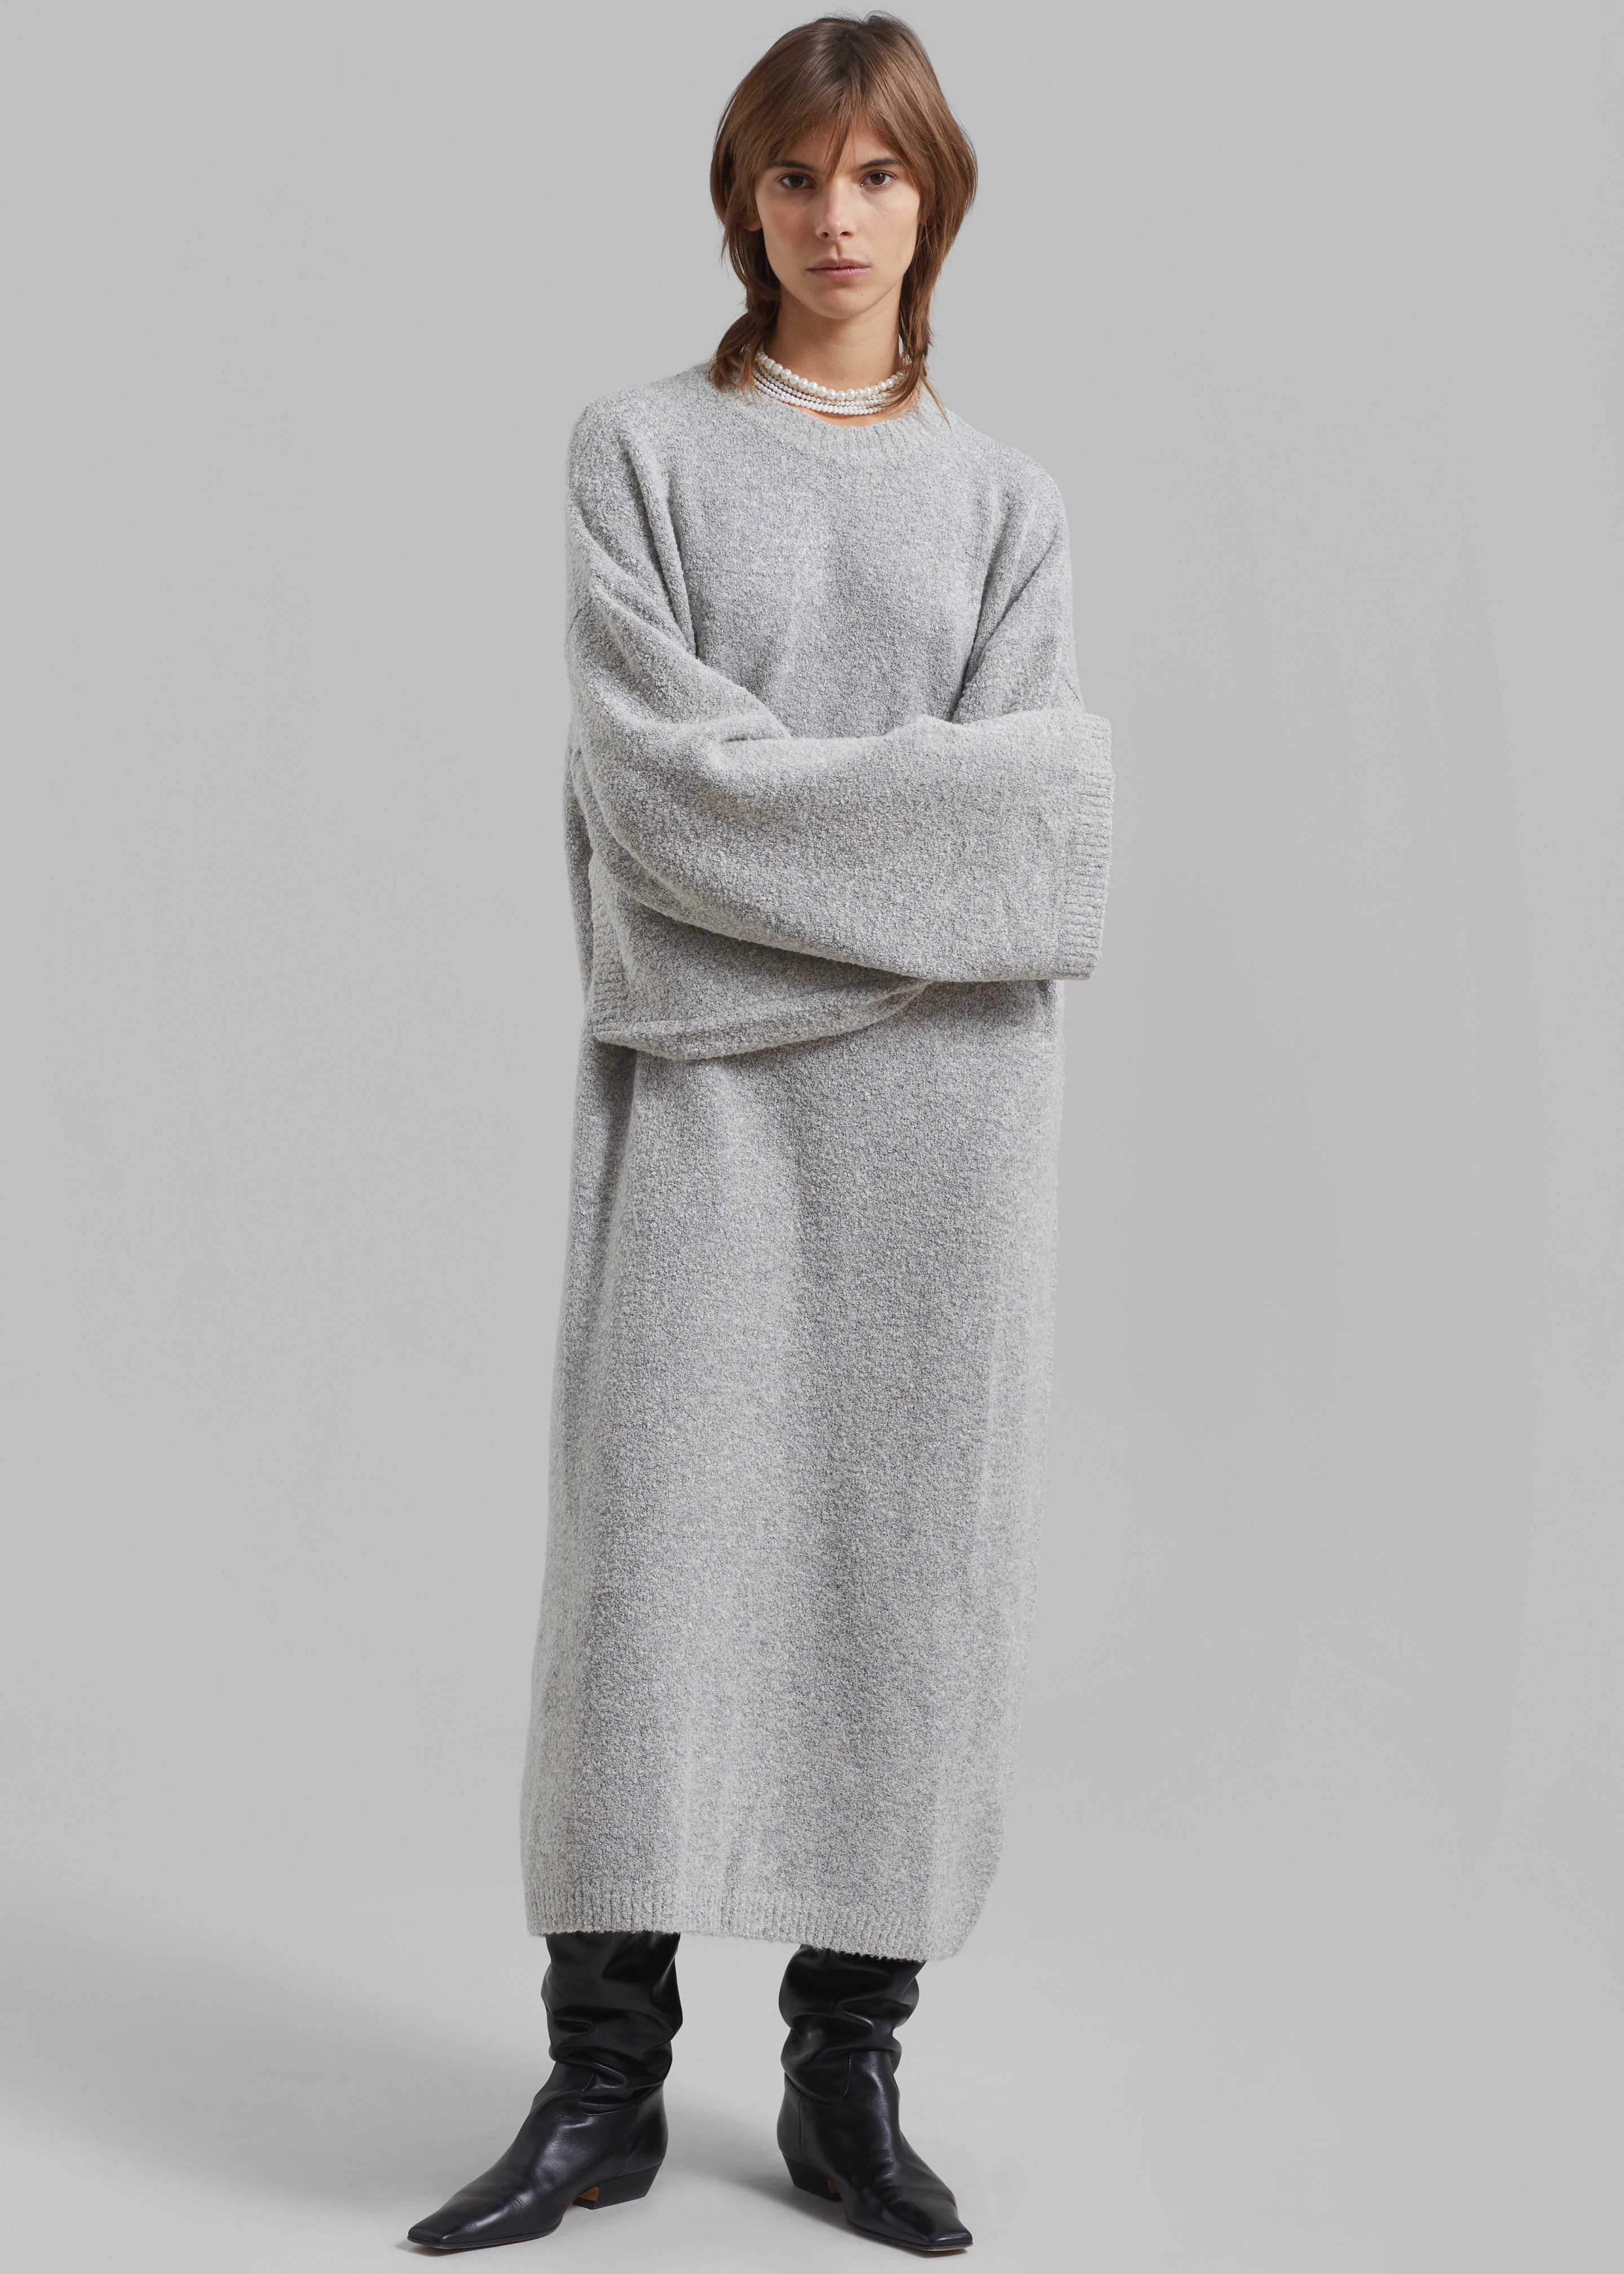 Alba Long Hooded Dress - Grey